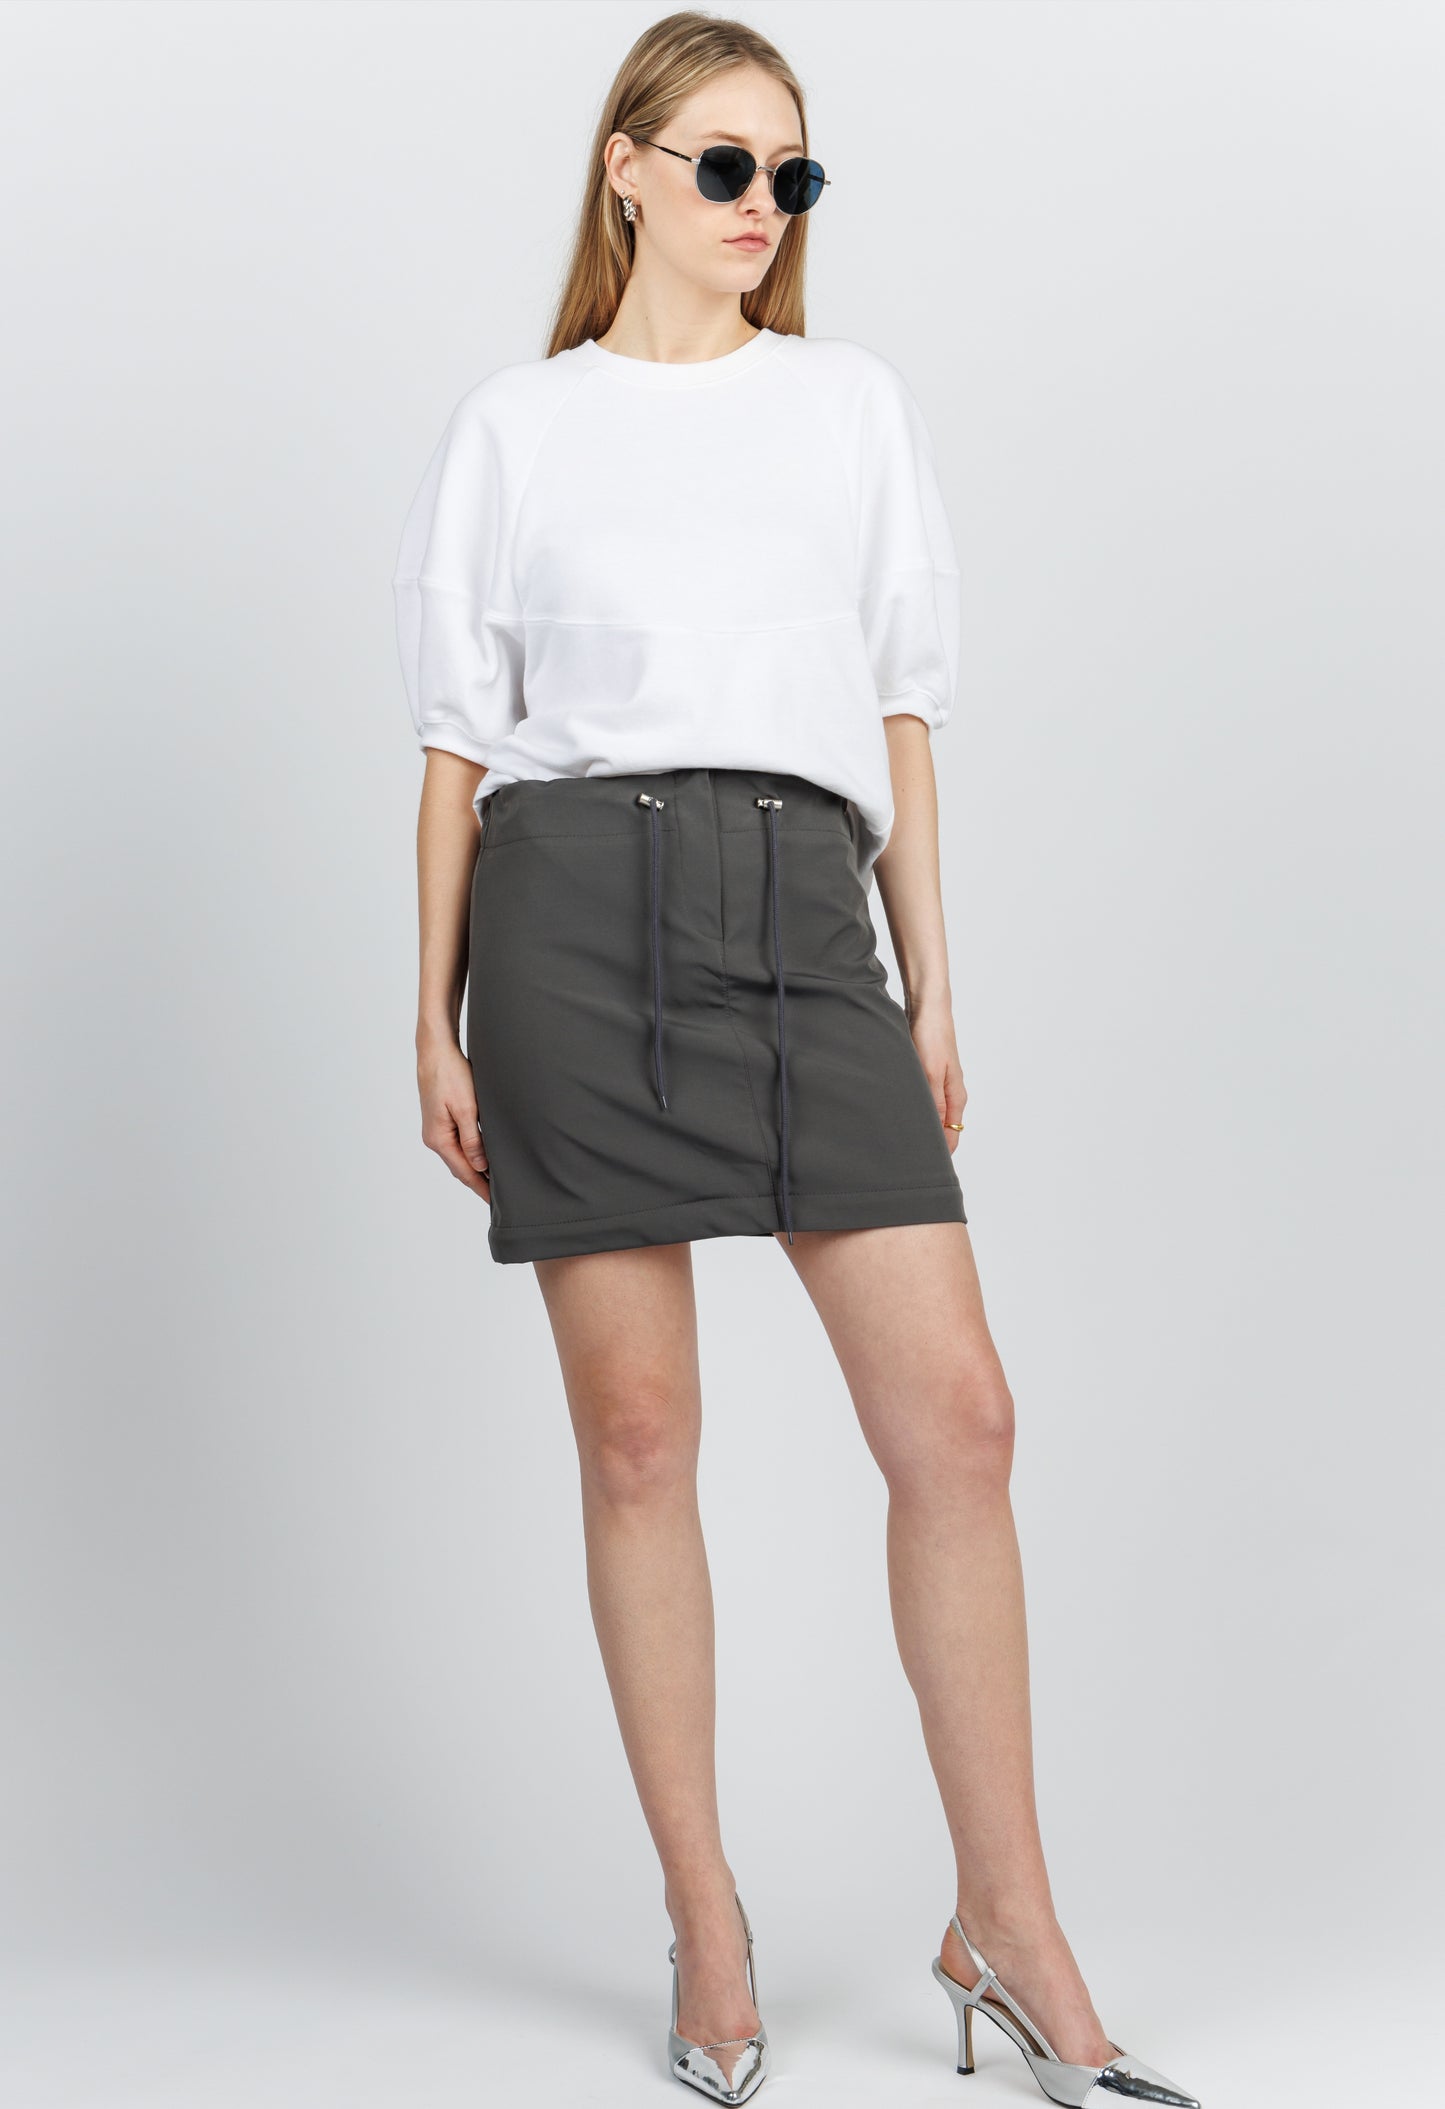 Versatile Utility Skirt in Grey